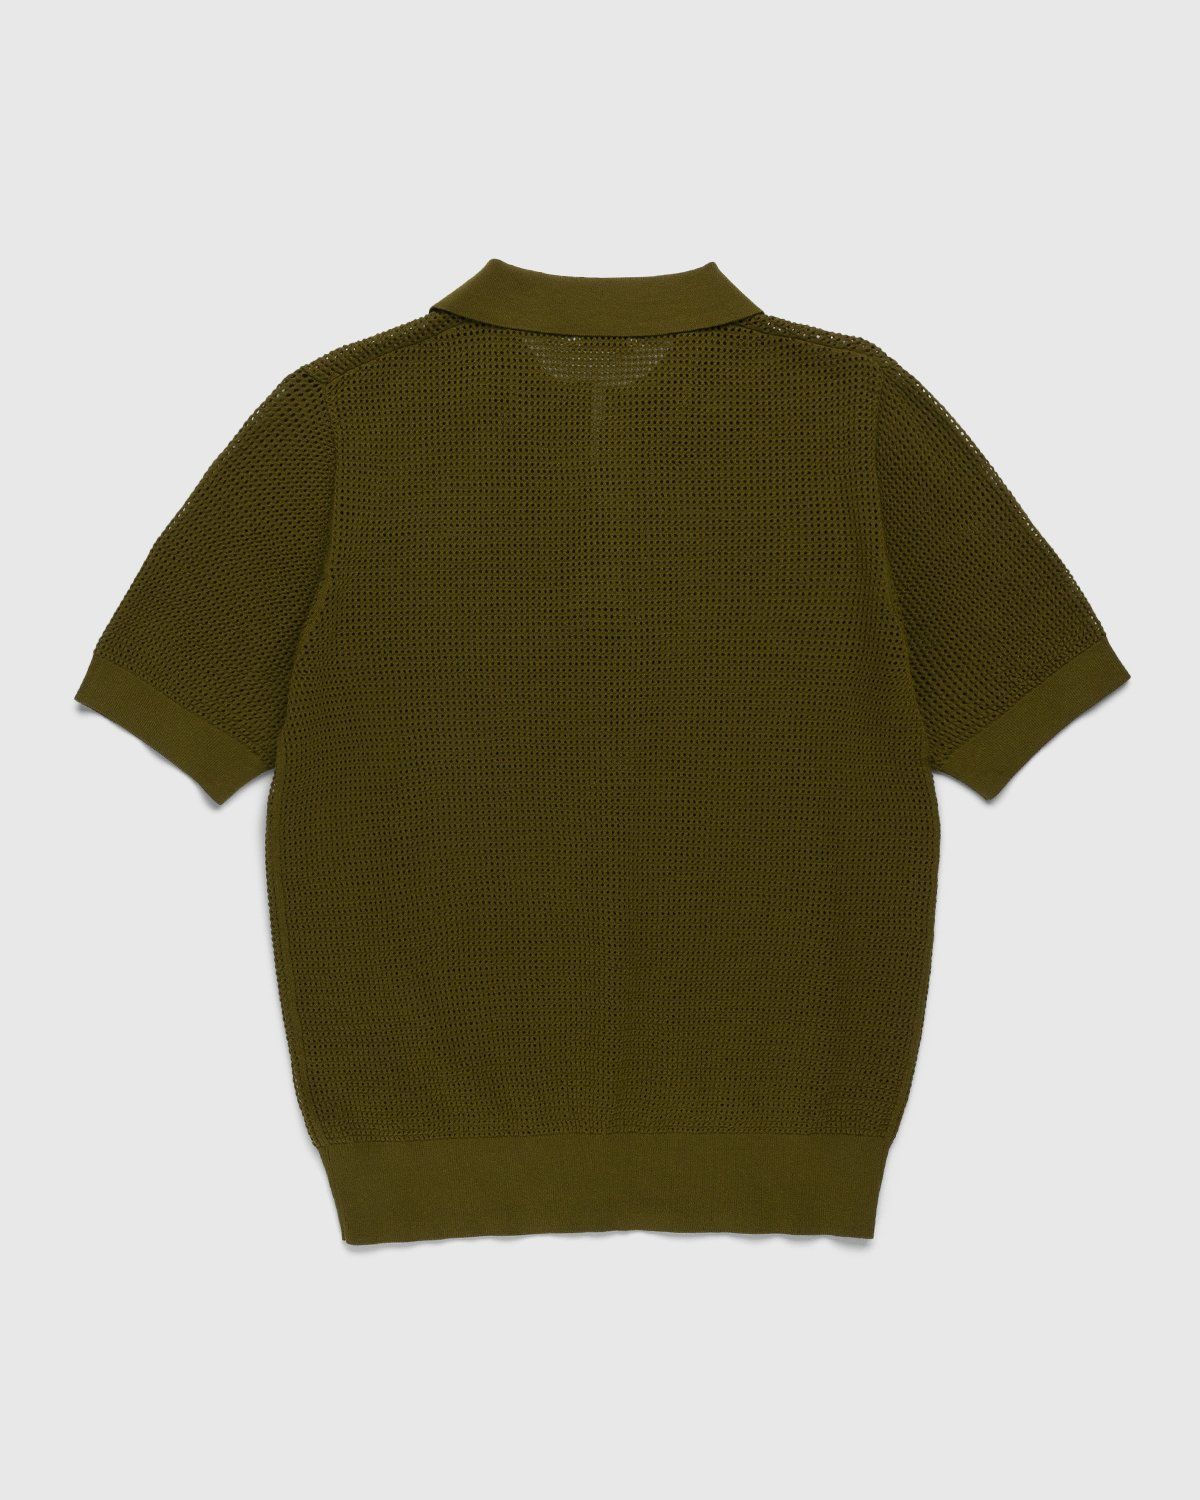 Dries van Noten – Jael Polo Shirt Olive - Polos - Green - Image 2